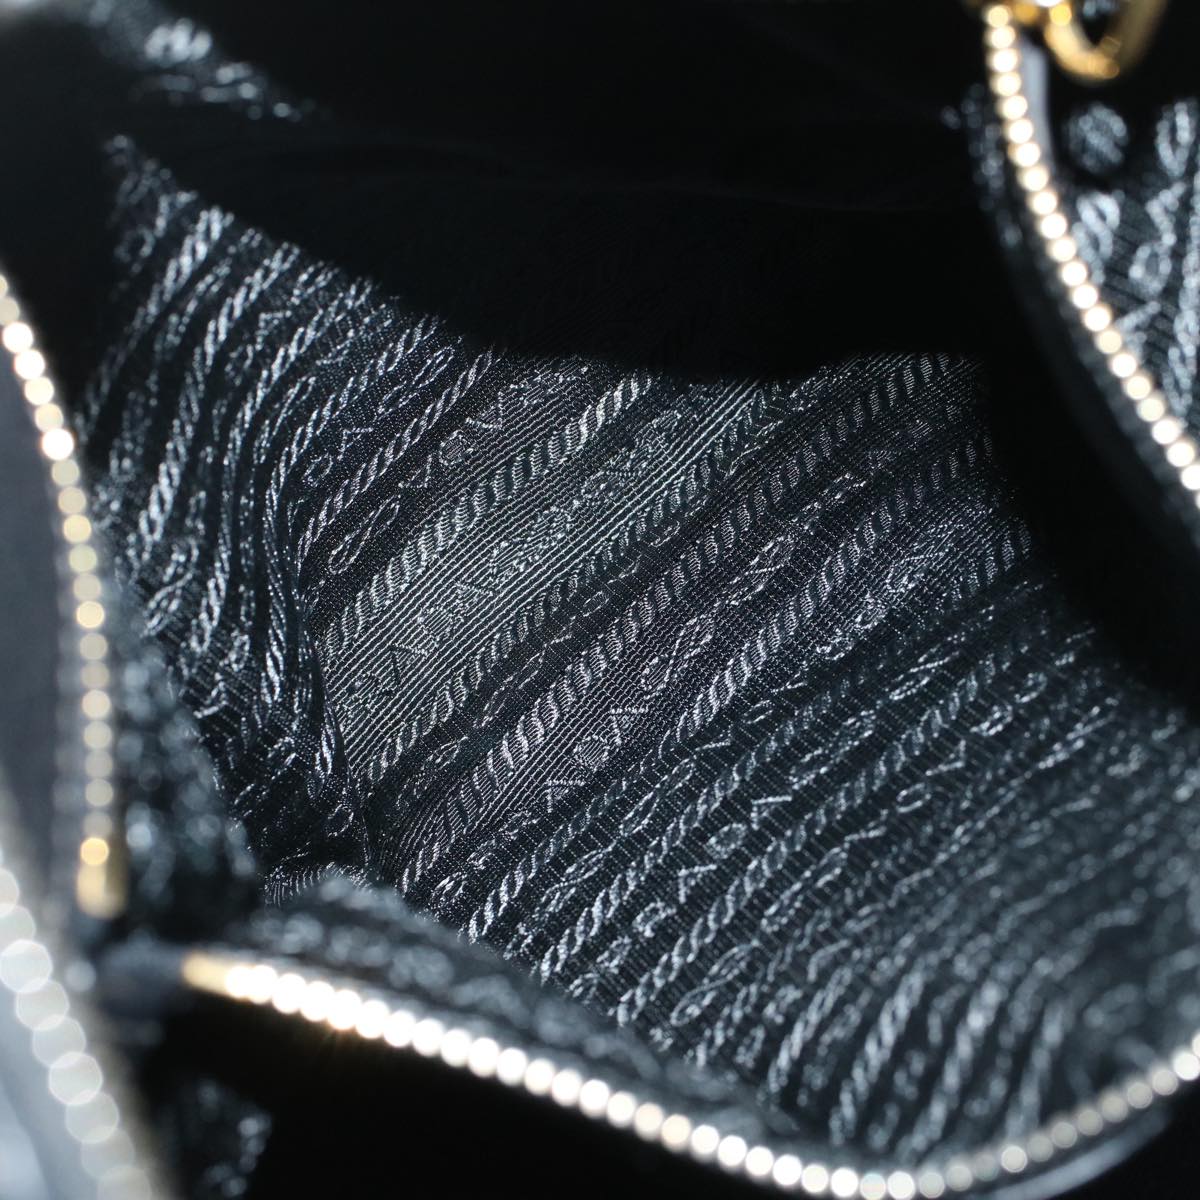 PRADA Hand Bag Leather 2way Black Auth ki3642